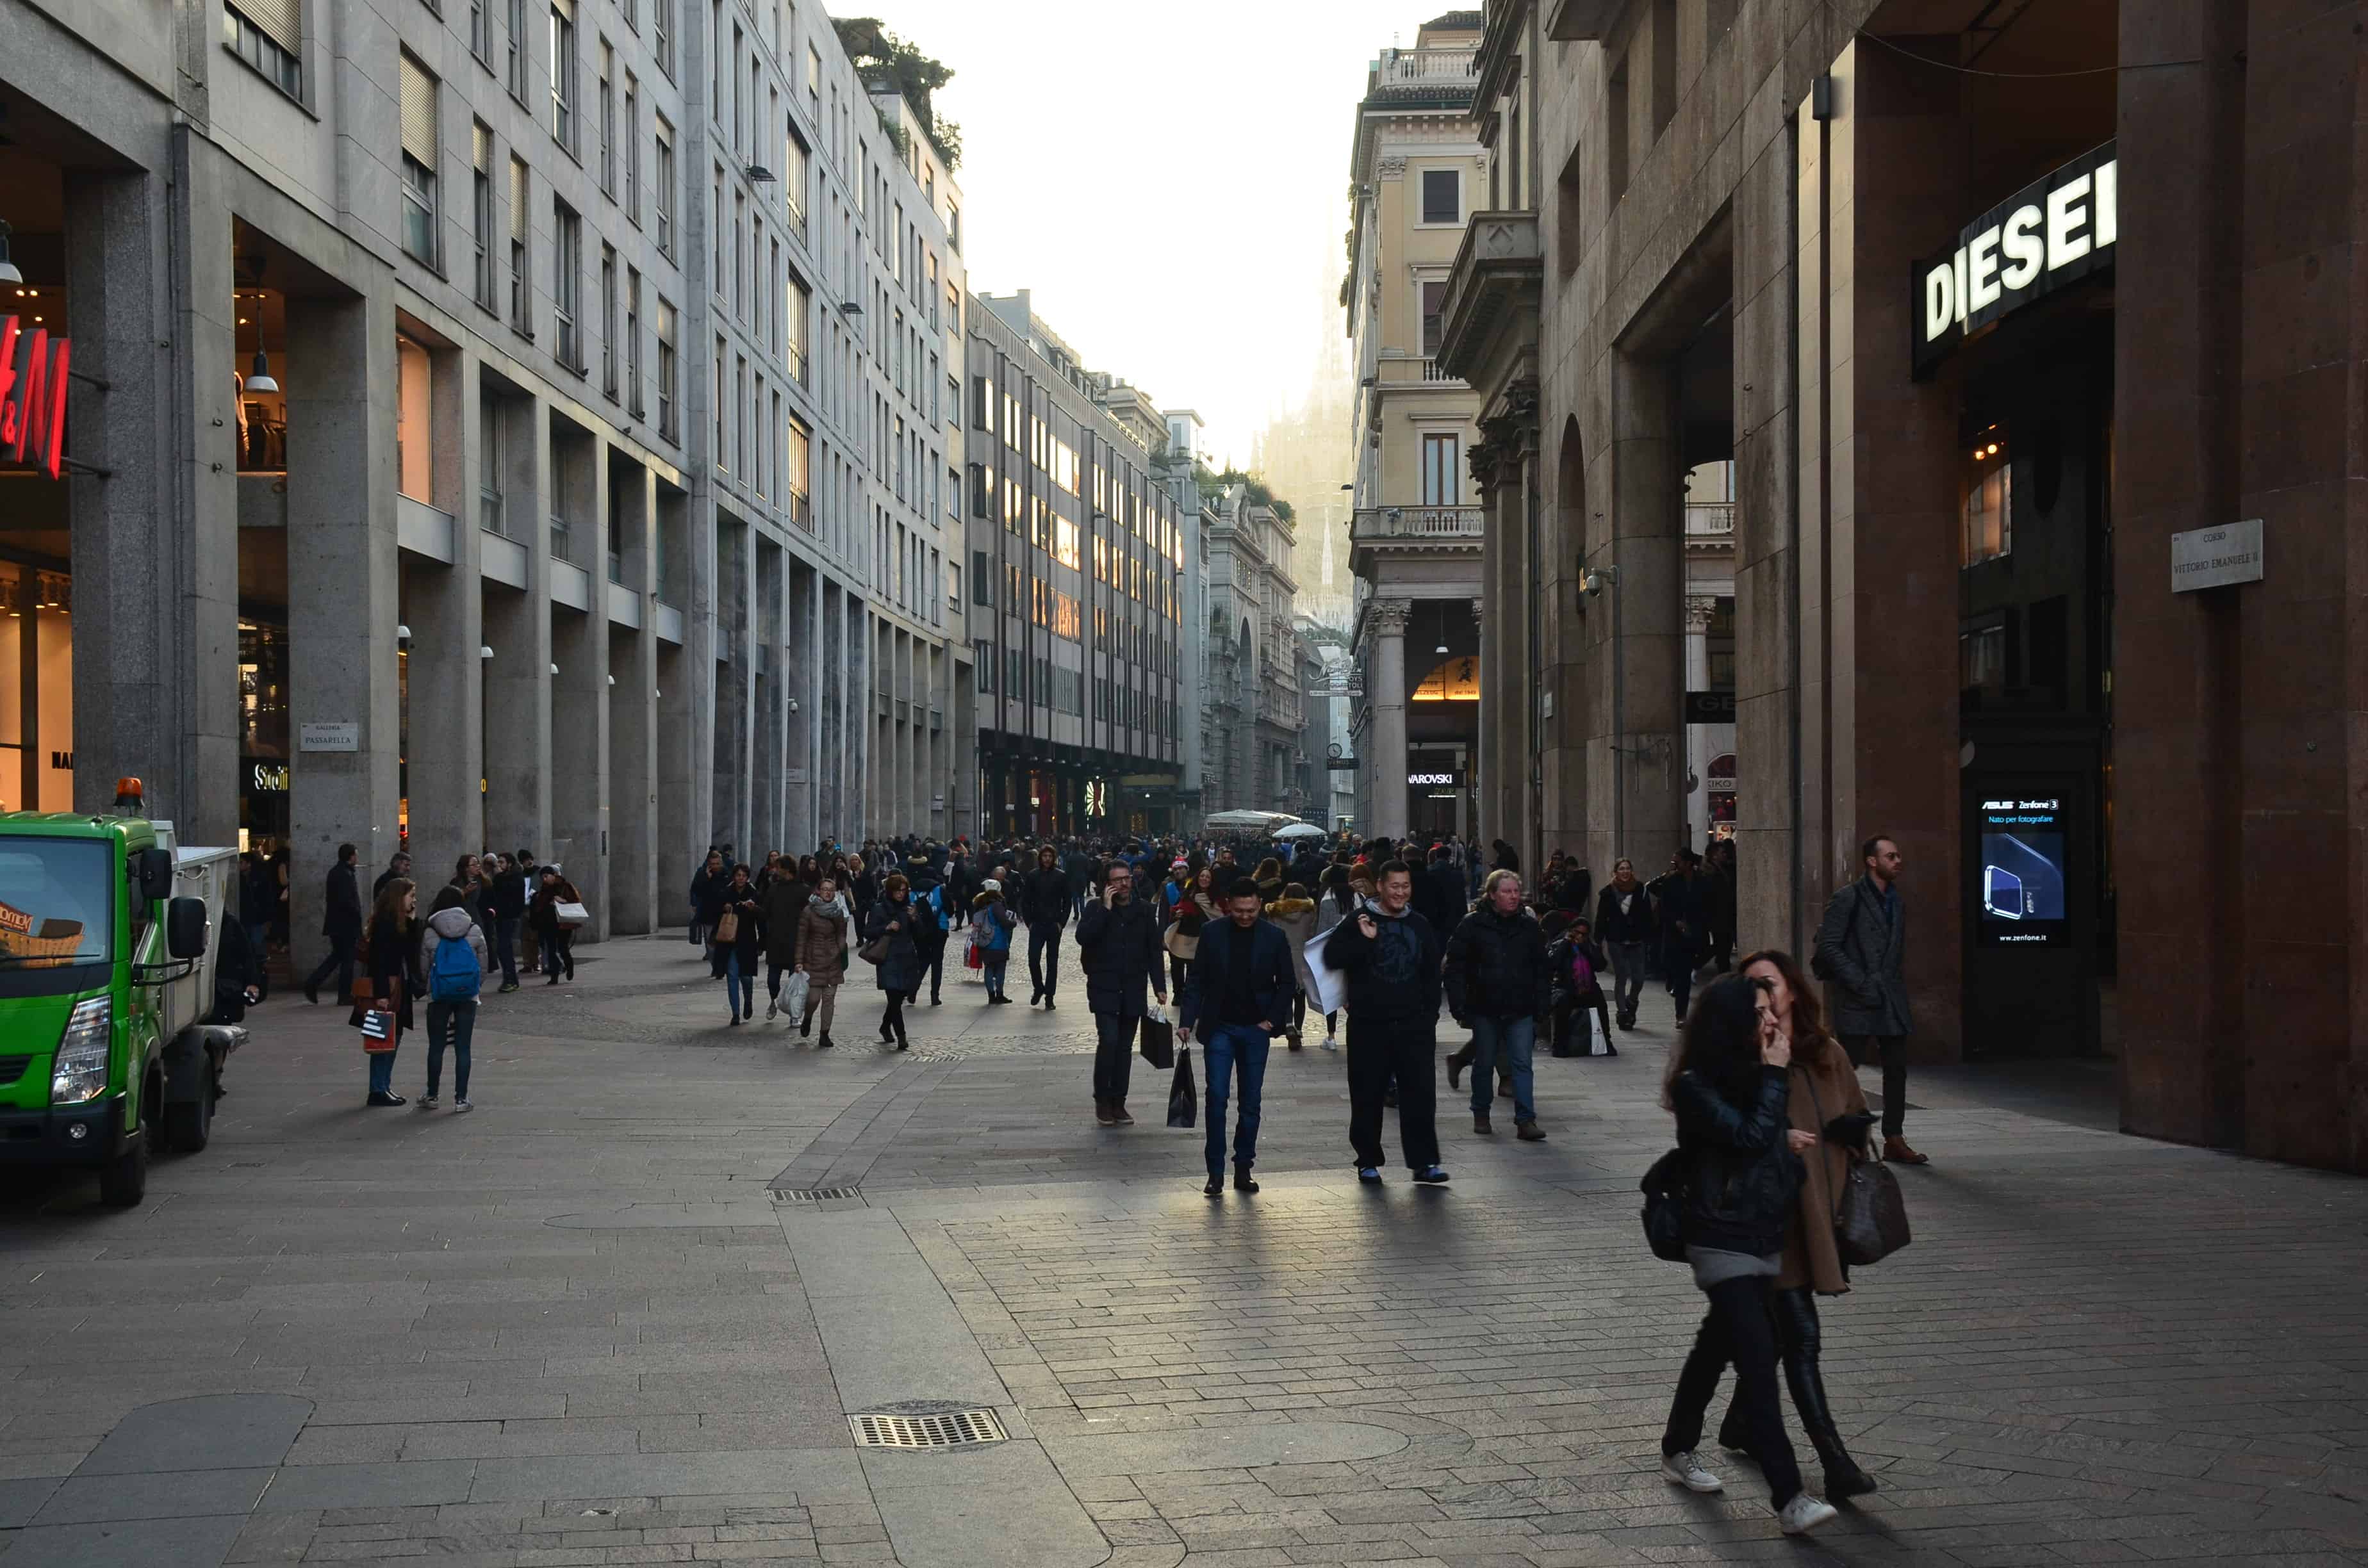 Corso Vittorio Emanuele II in Milan, Italy